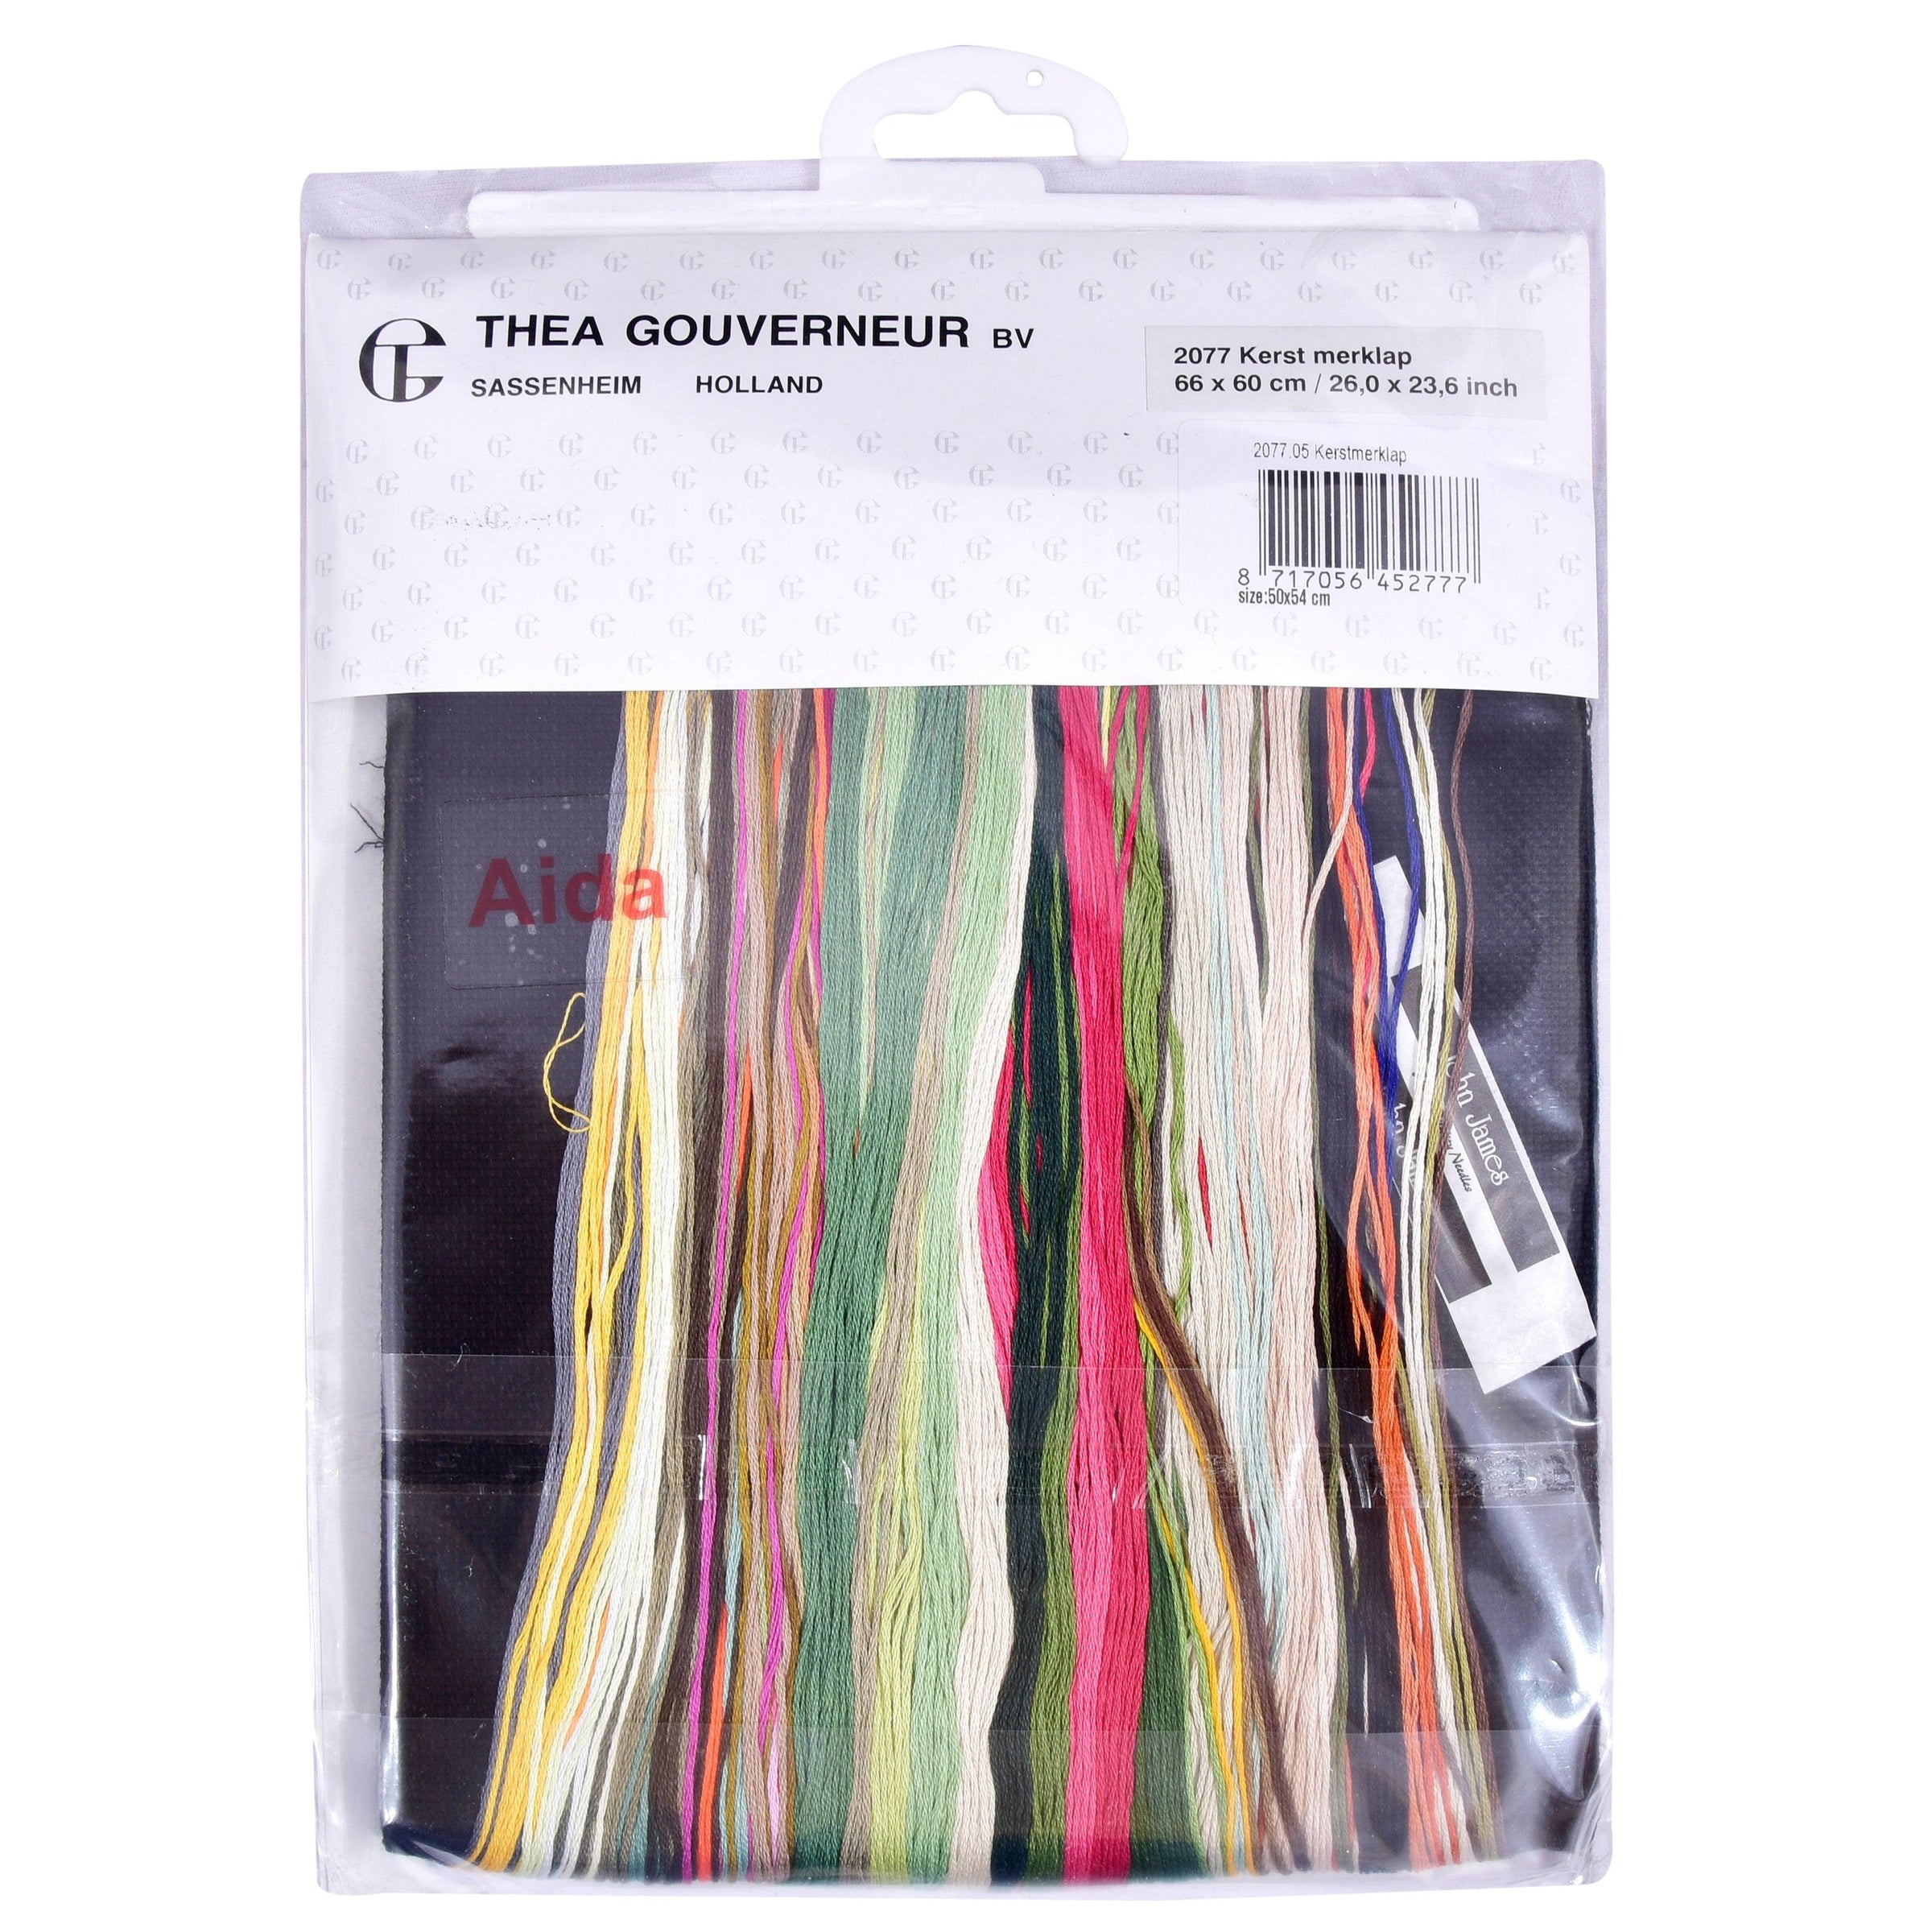 Thea Gouverneur - Counted Cross Stitch Kit - Christmas Design - Aida Black - 18 count - 2077.05 - Thea Gouverneur Since 1959